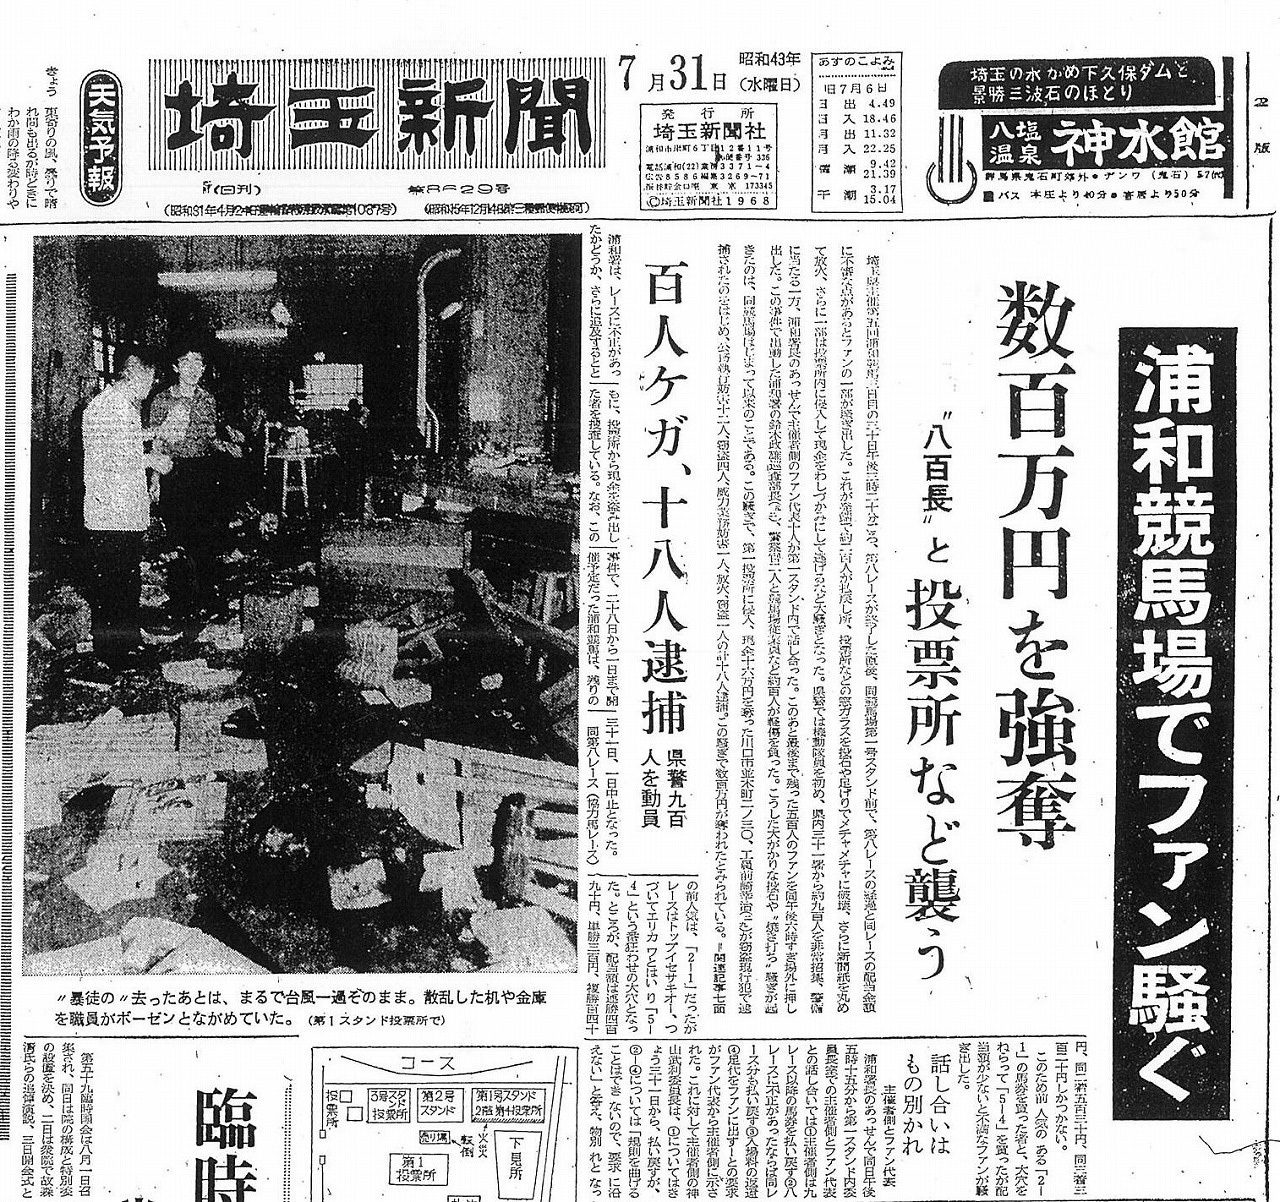 混乱と暴動 浦和競馬場70周年記念サイト